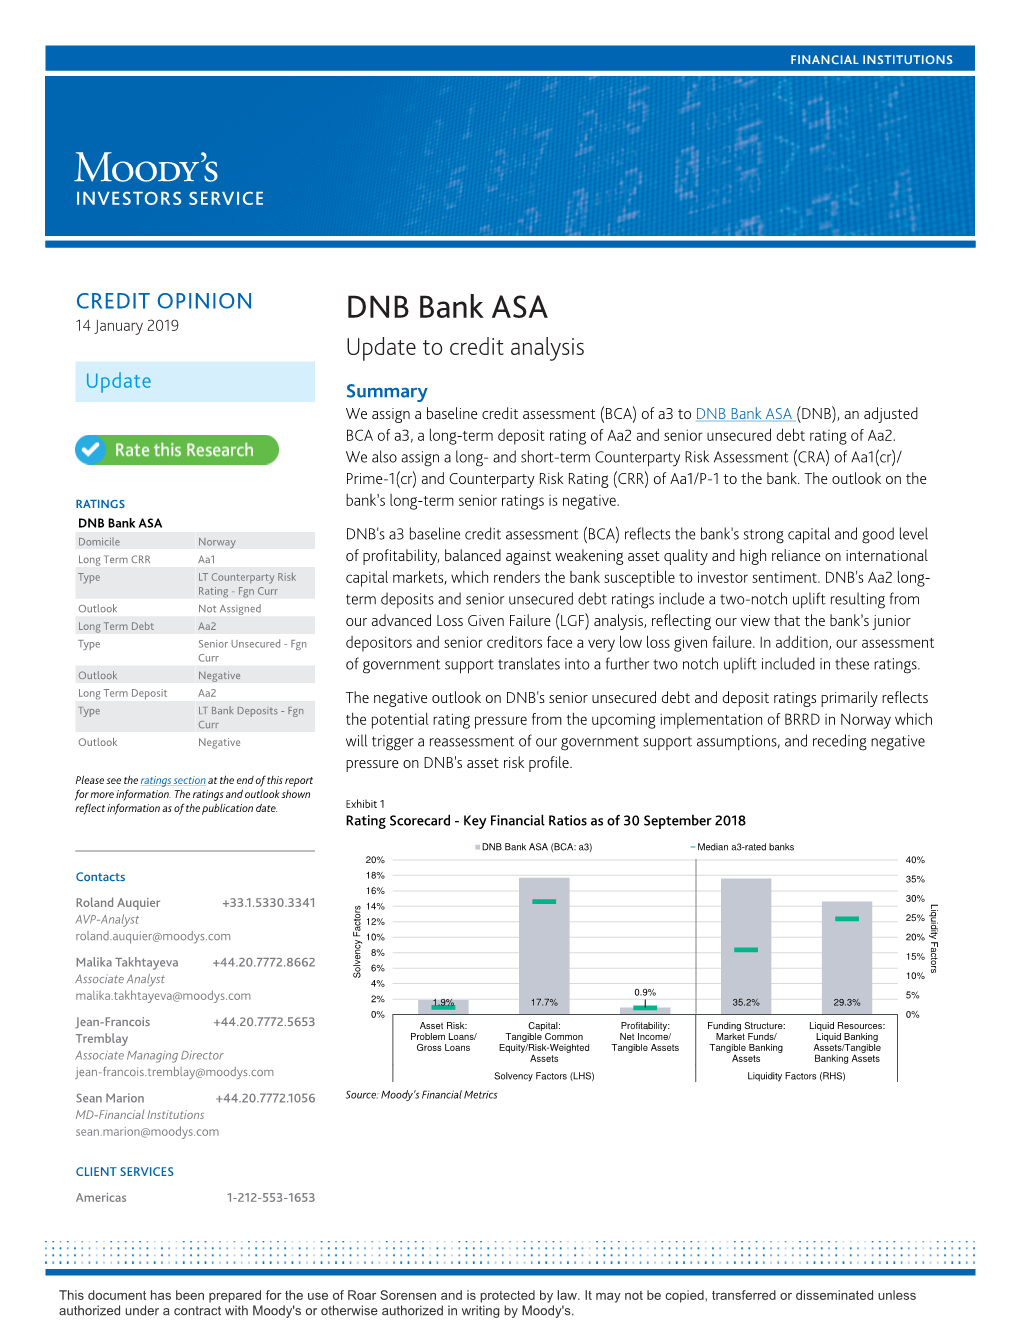 DNB Bank ASA 14 January 2019 Update to Credit Analysis